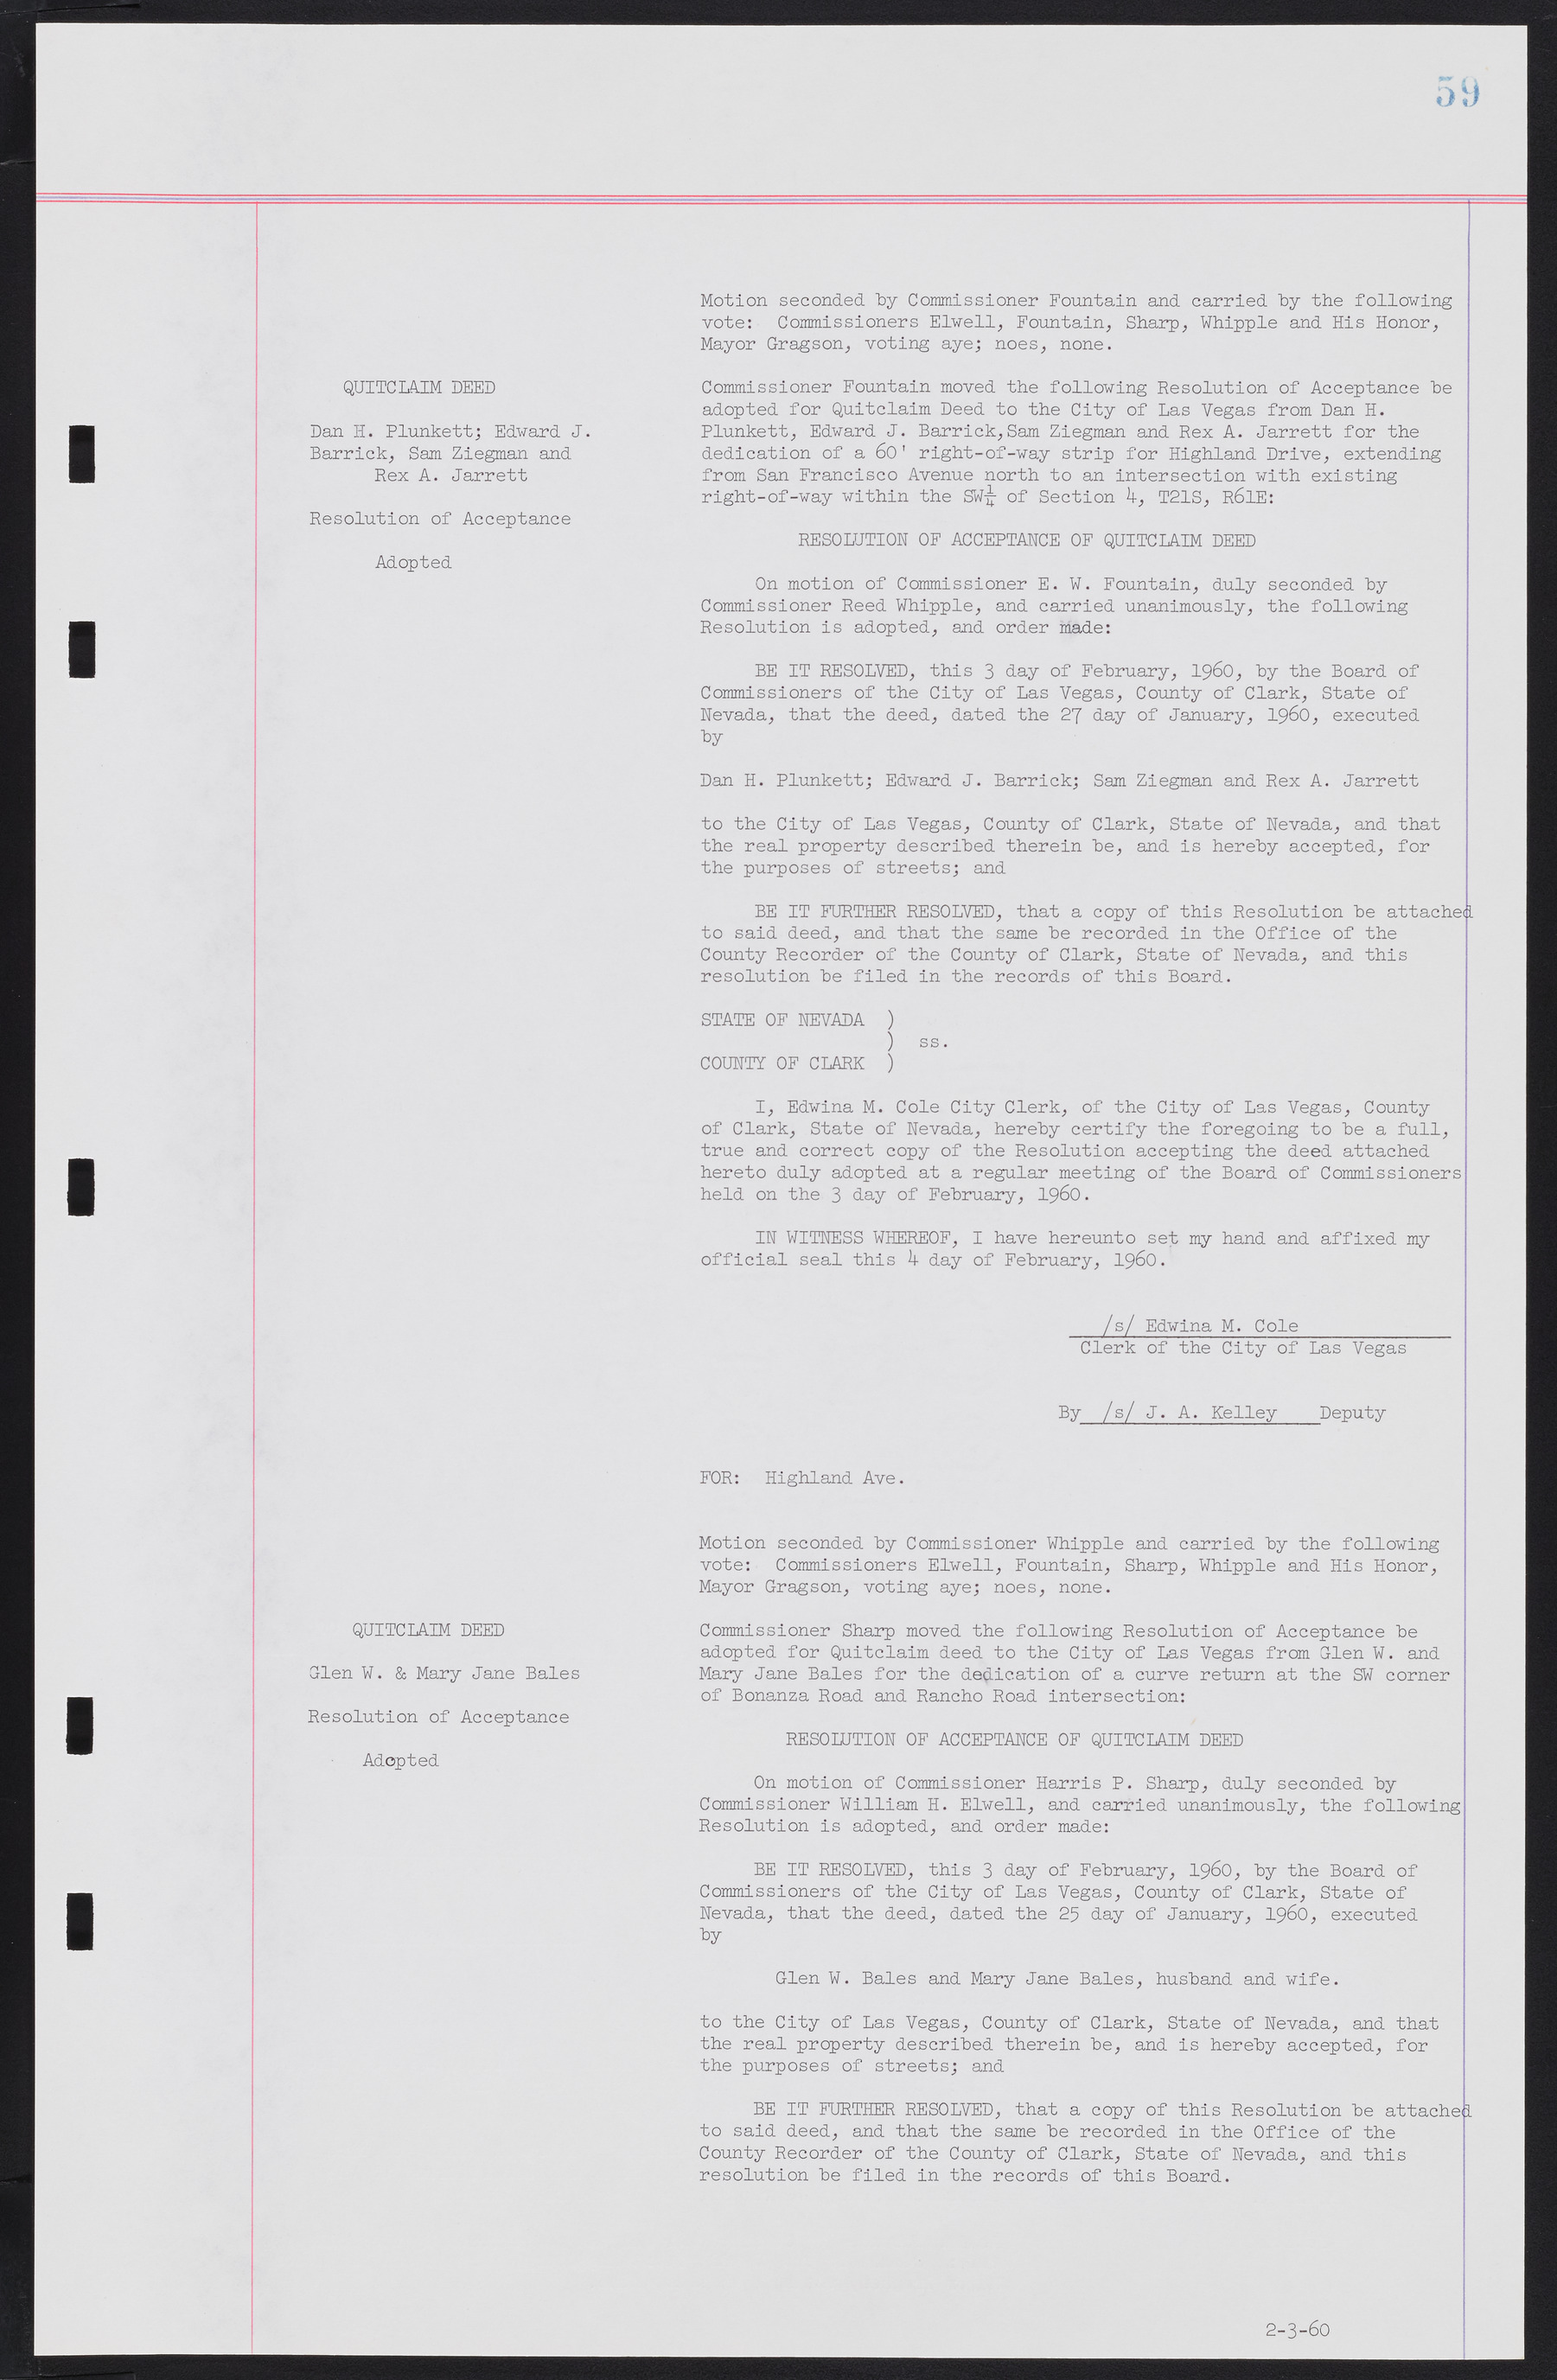 Las Vegas City Commission Minutes, December 8, 1959 to February 17, 1960, lvc000012-63